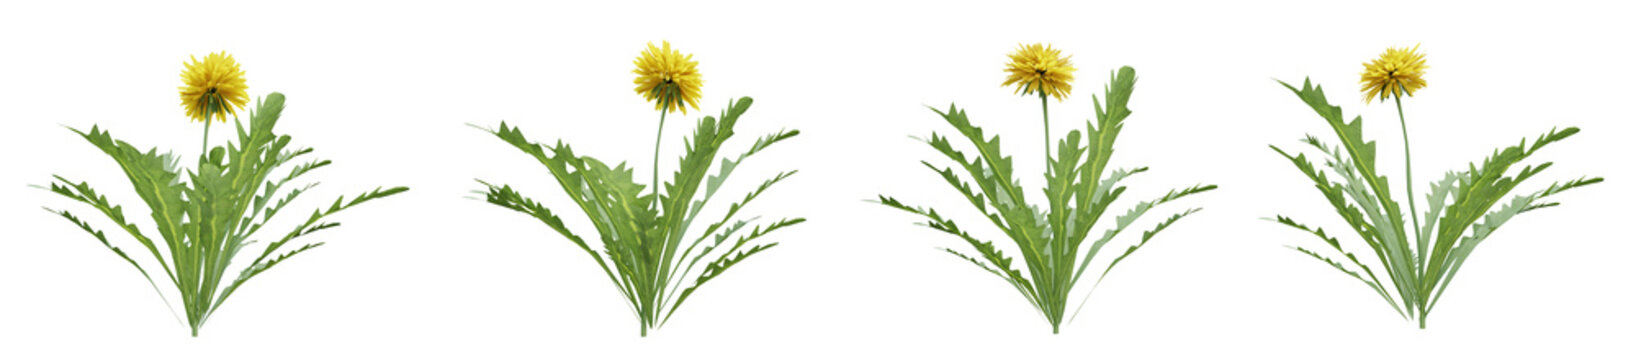 Flowers plant on transparent background, nature meadow, 3d render illustration.